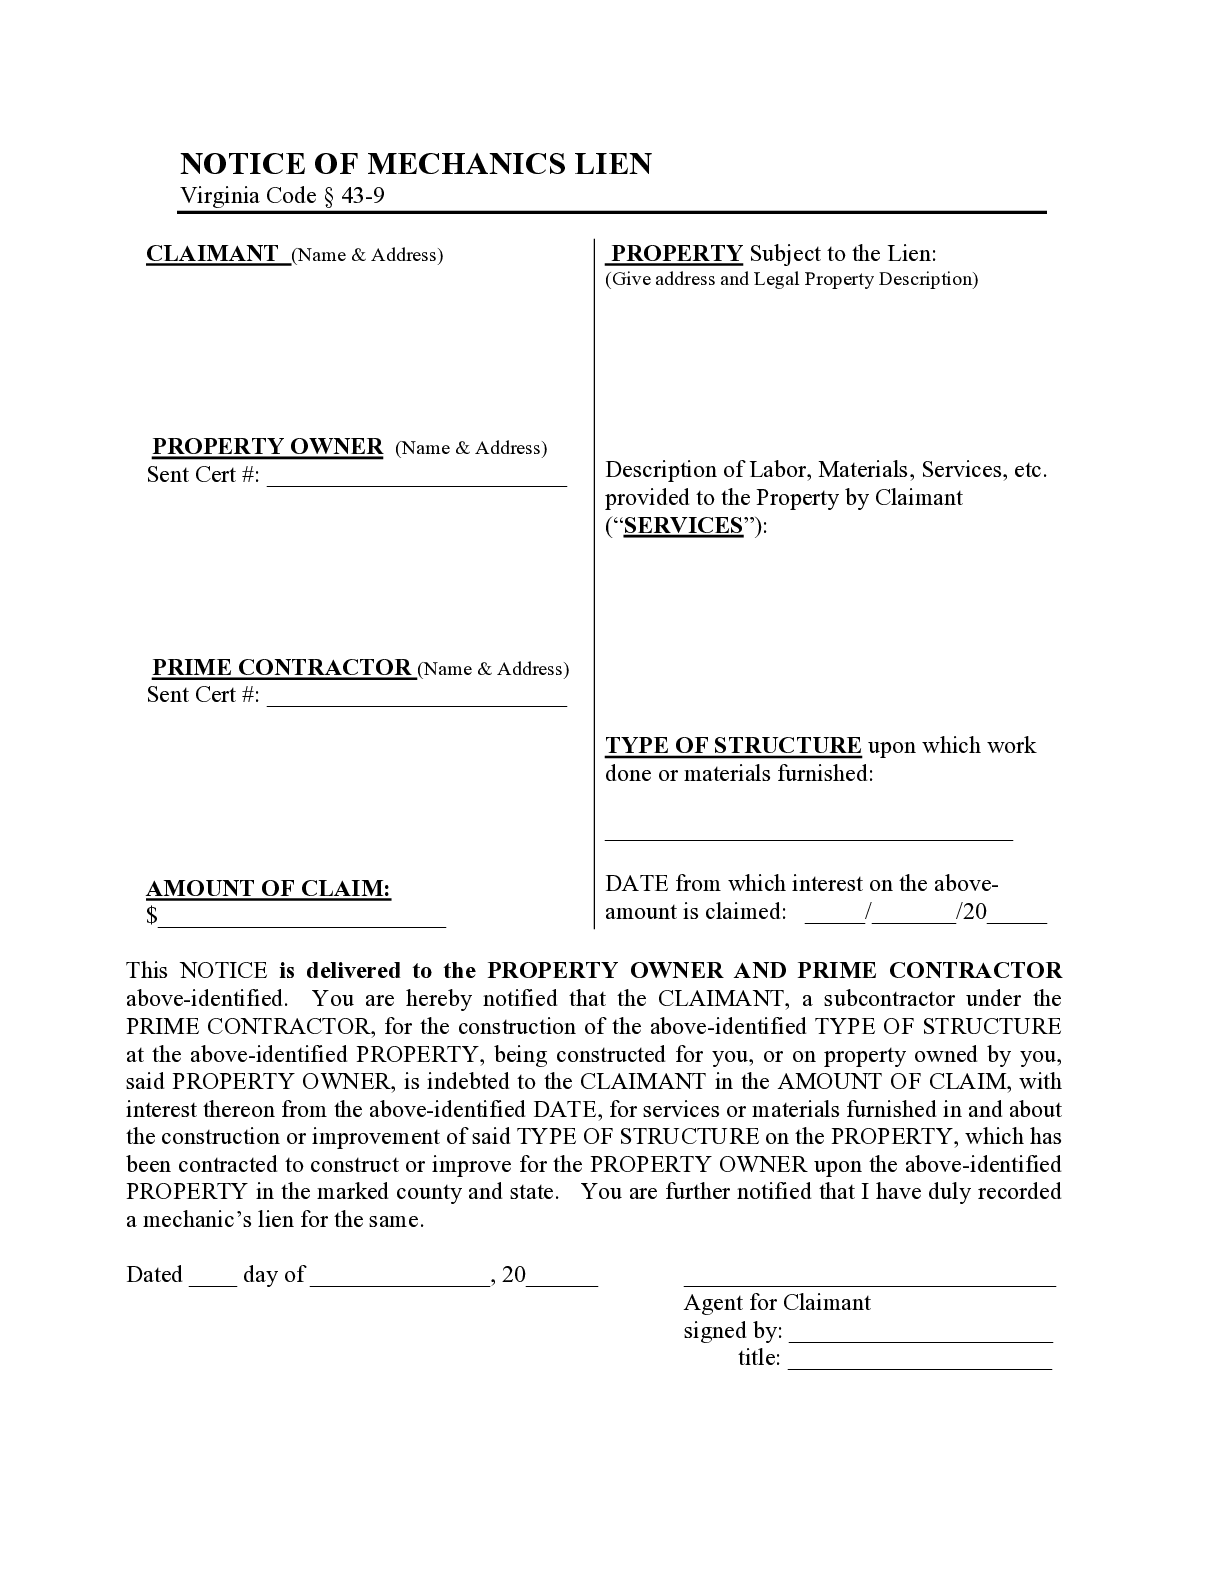 Virginia Memorandum of Lien for Sub-Subcontractors Form - free from